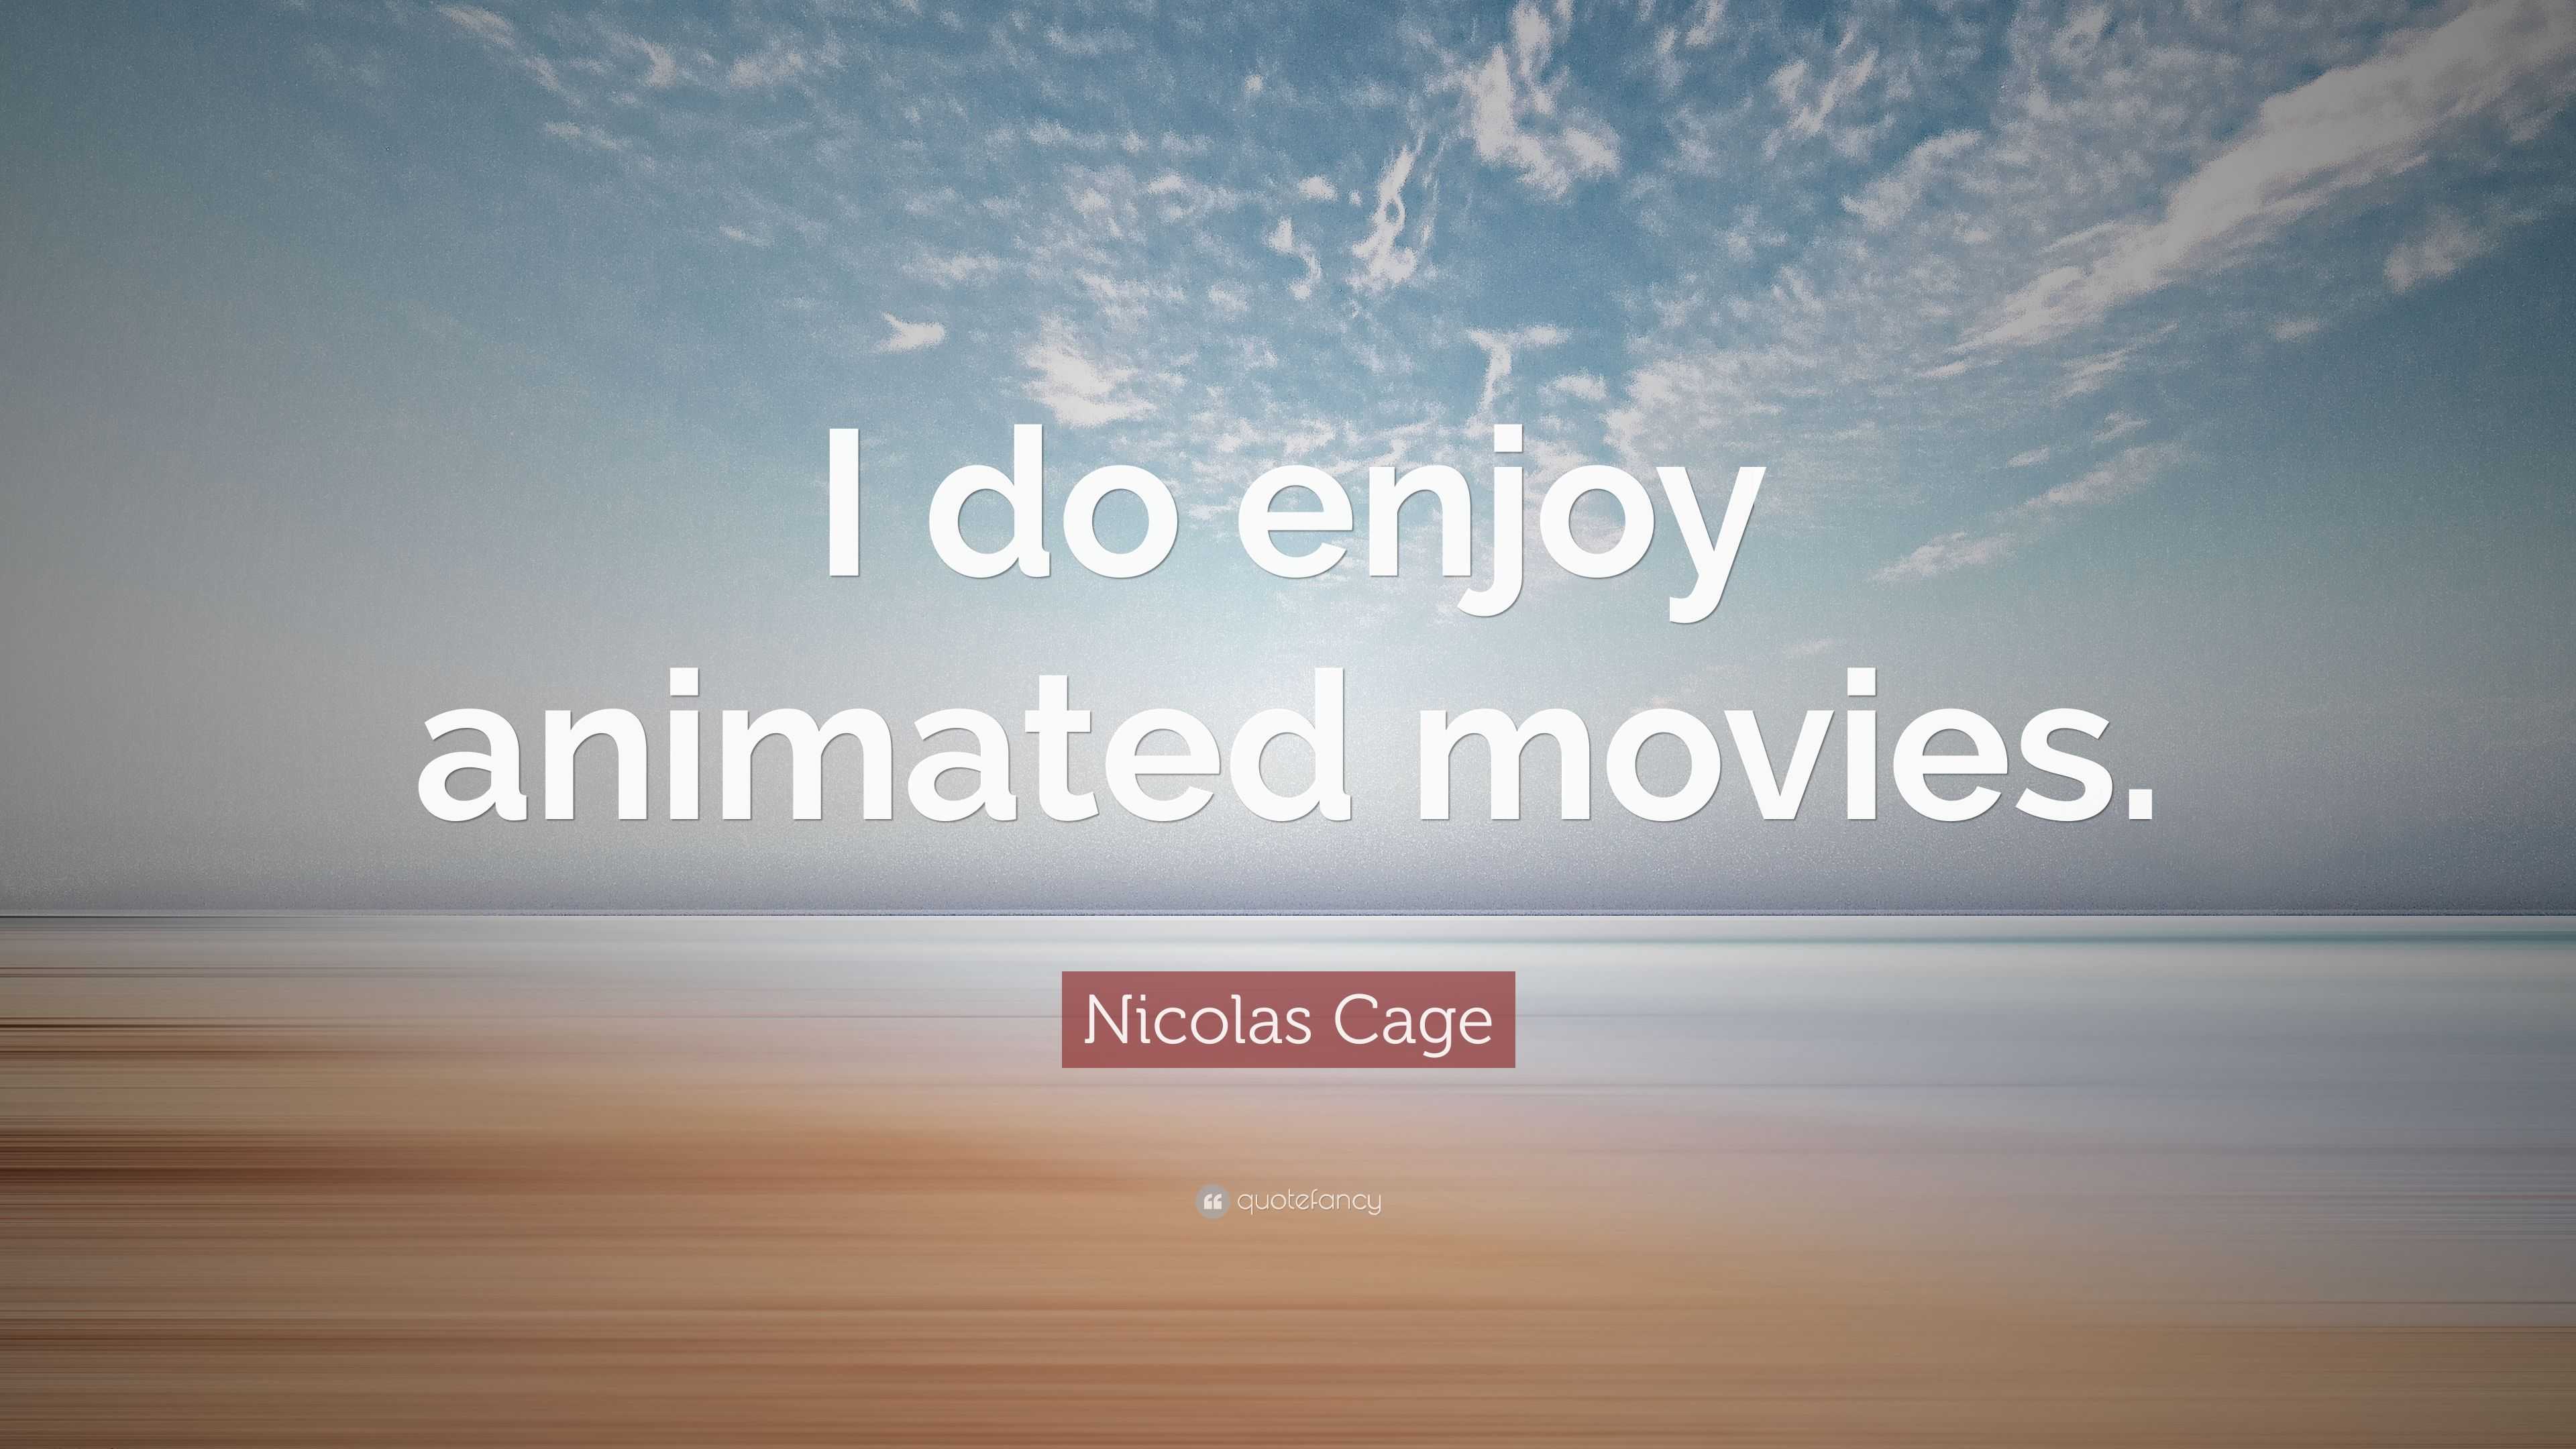 Nicolas Cage Quote: “I do enjoy animated movies.”